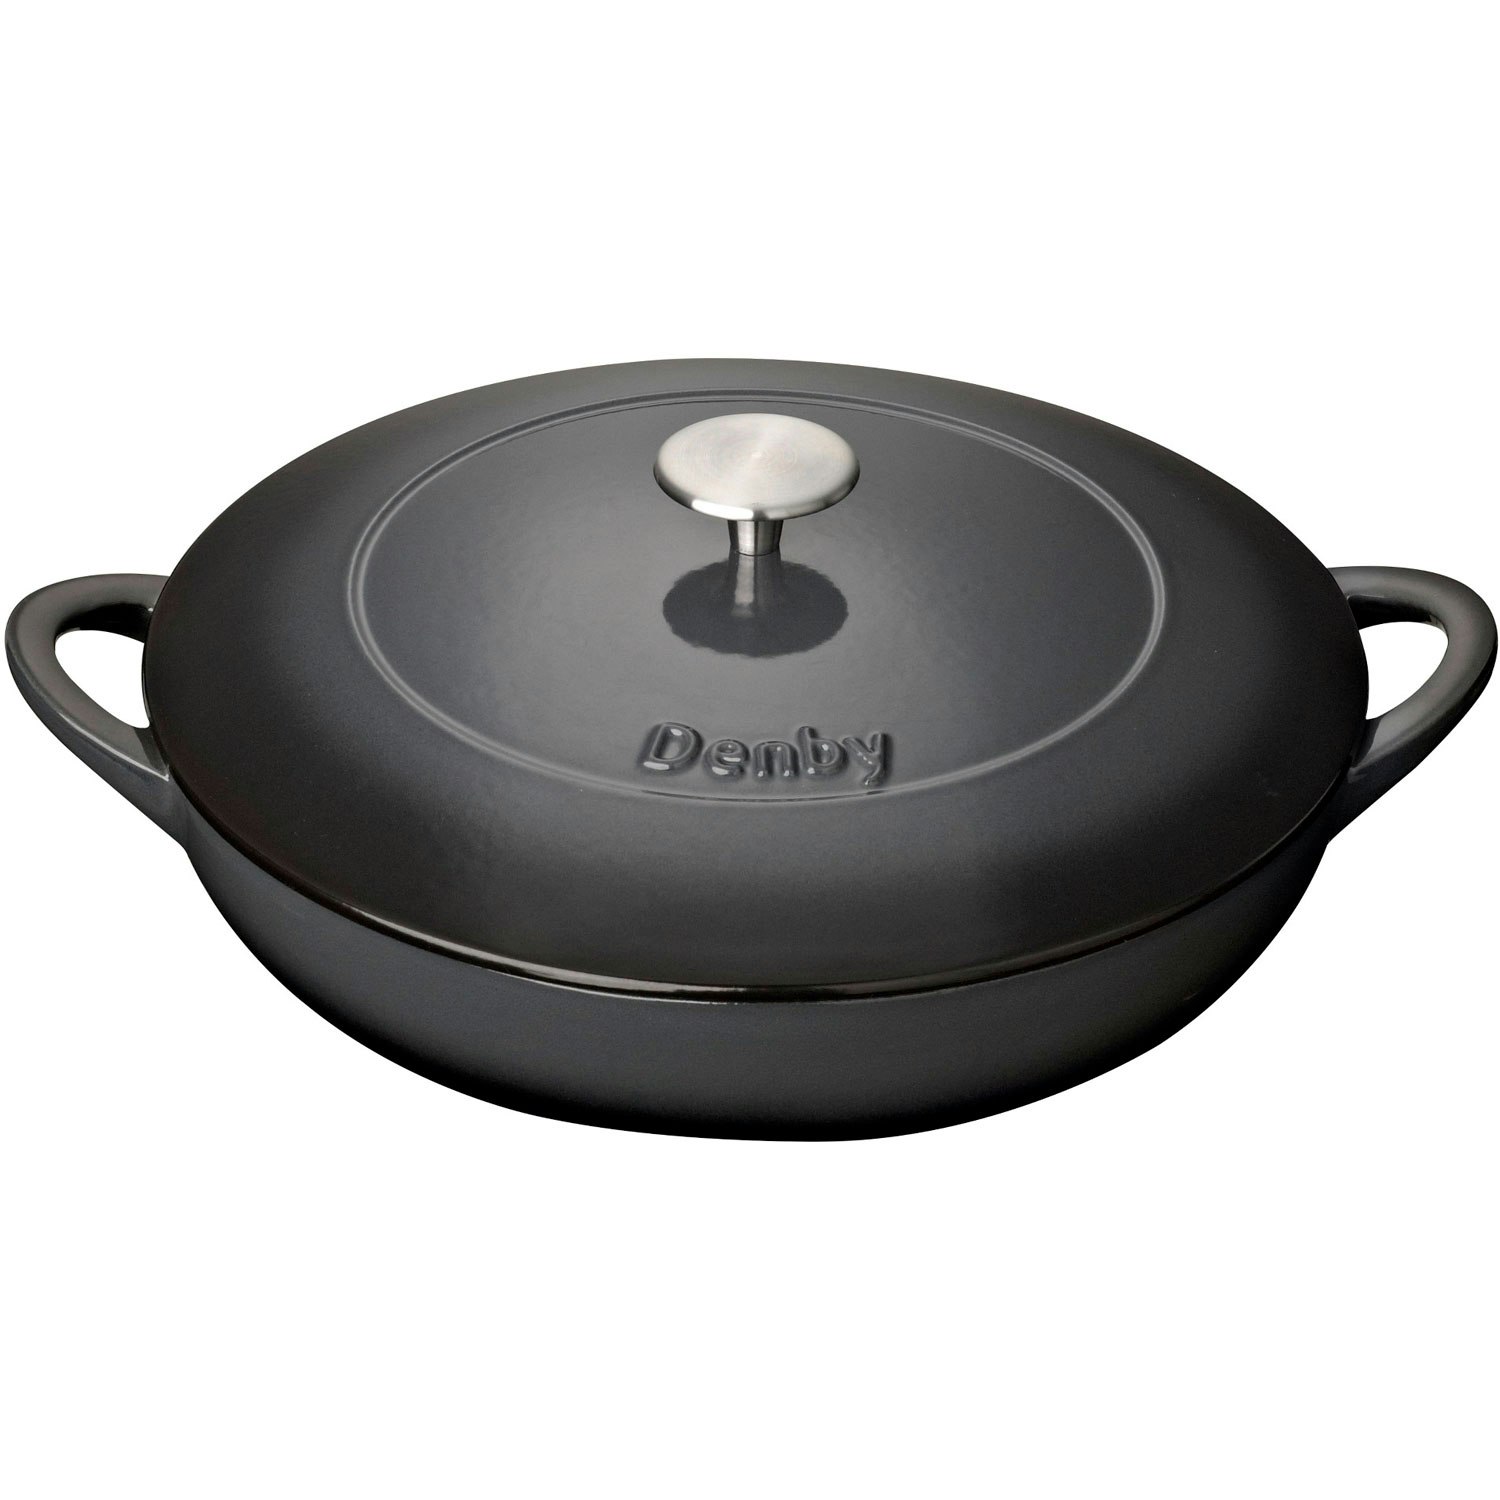 https://royaldesign.com/image/2/denby-cast-iron-30cm-shallow-casserole-5